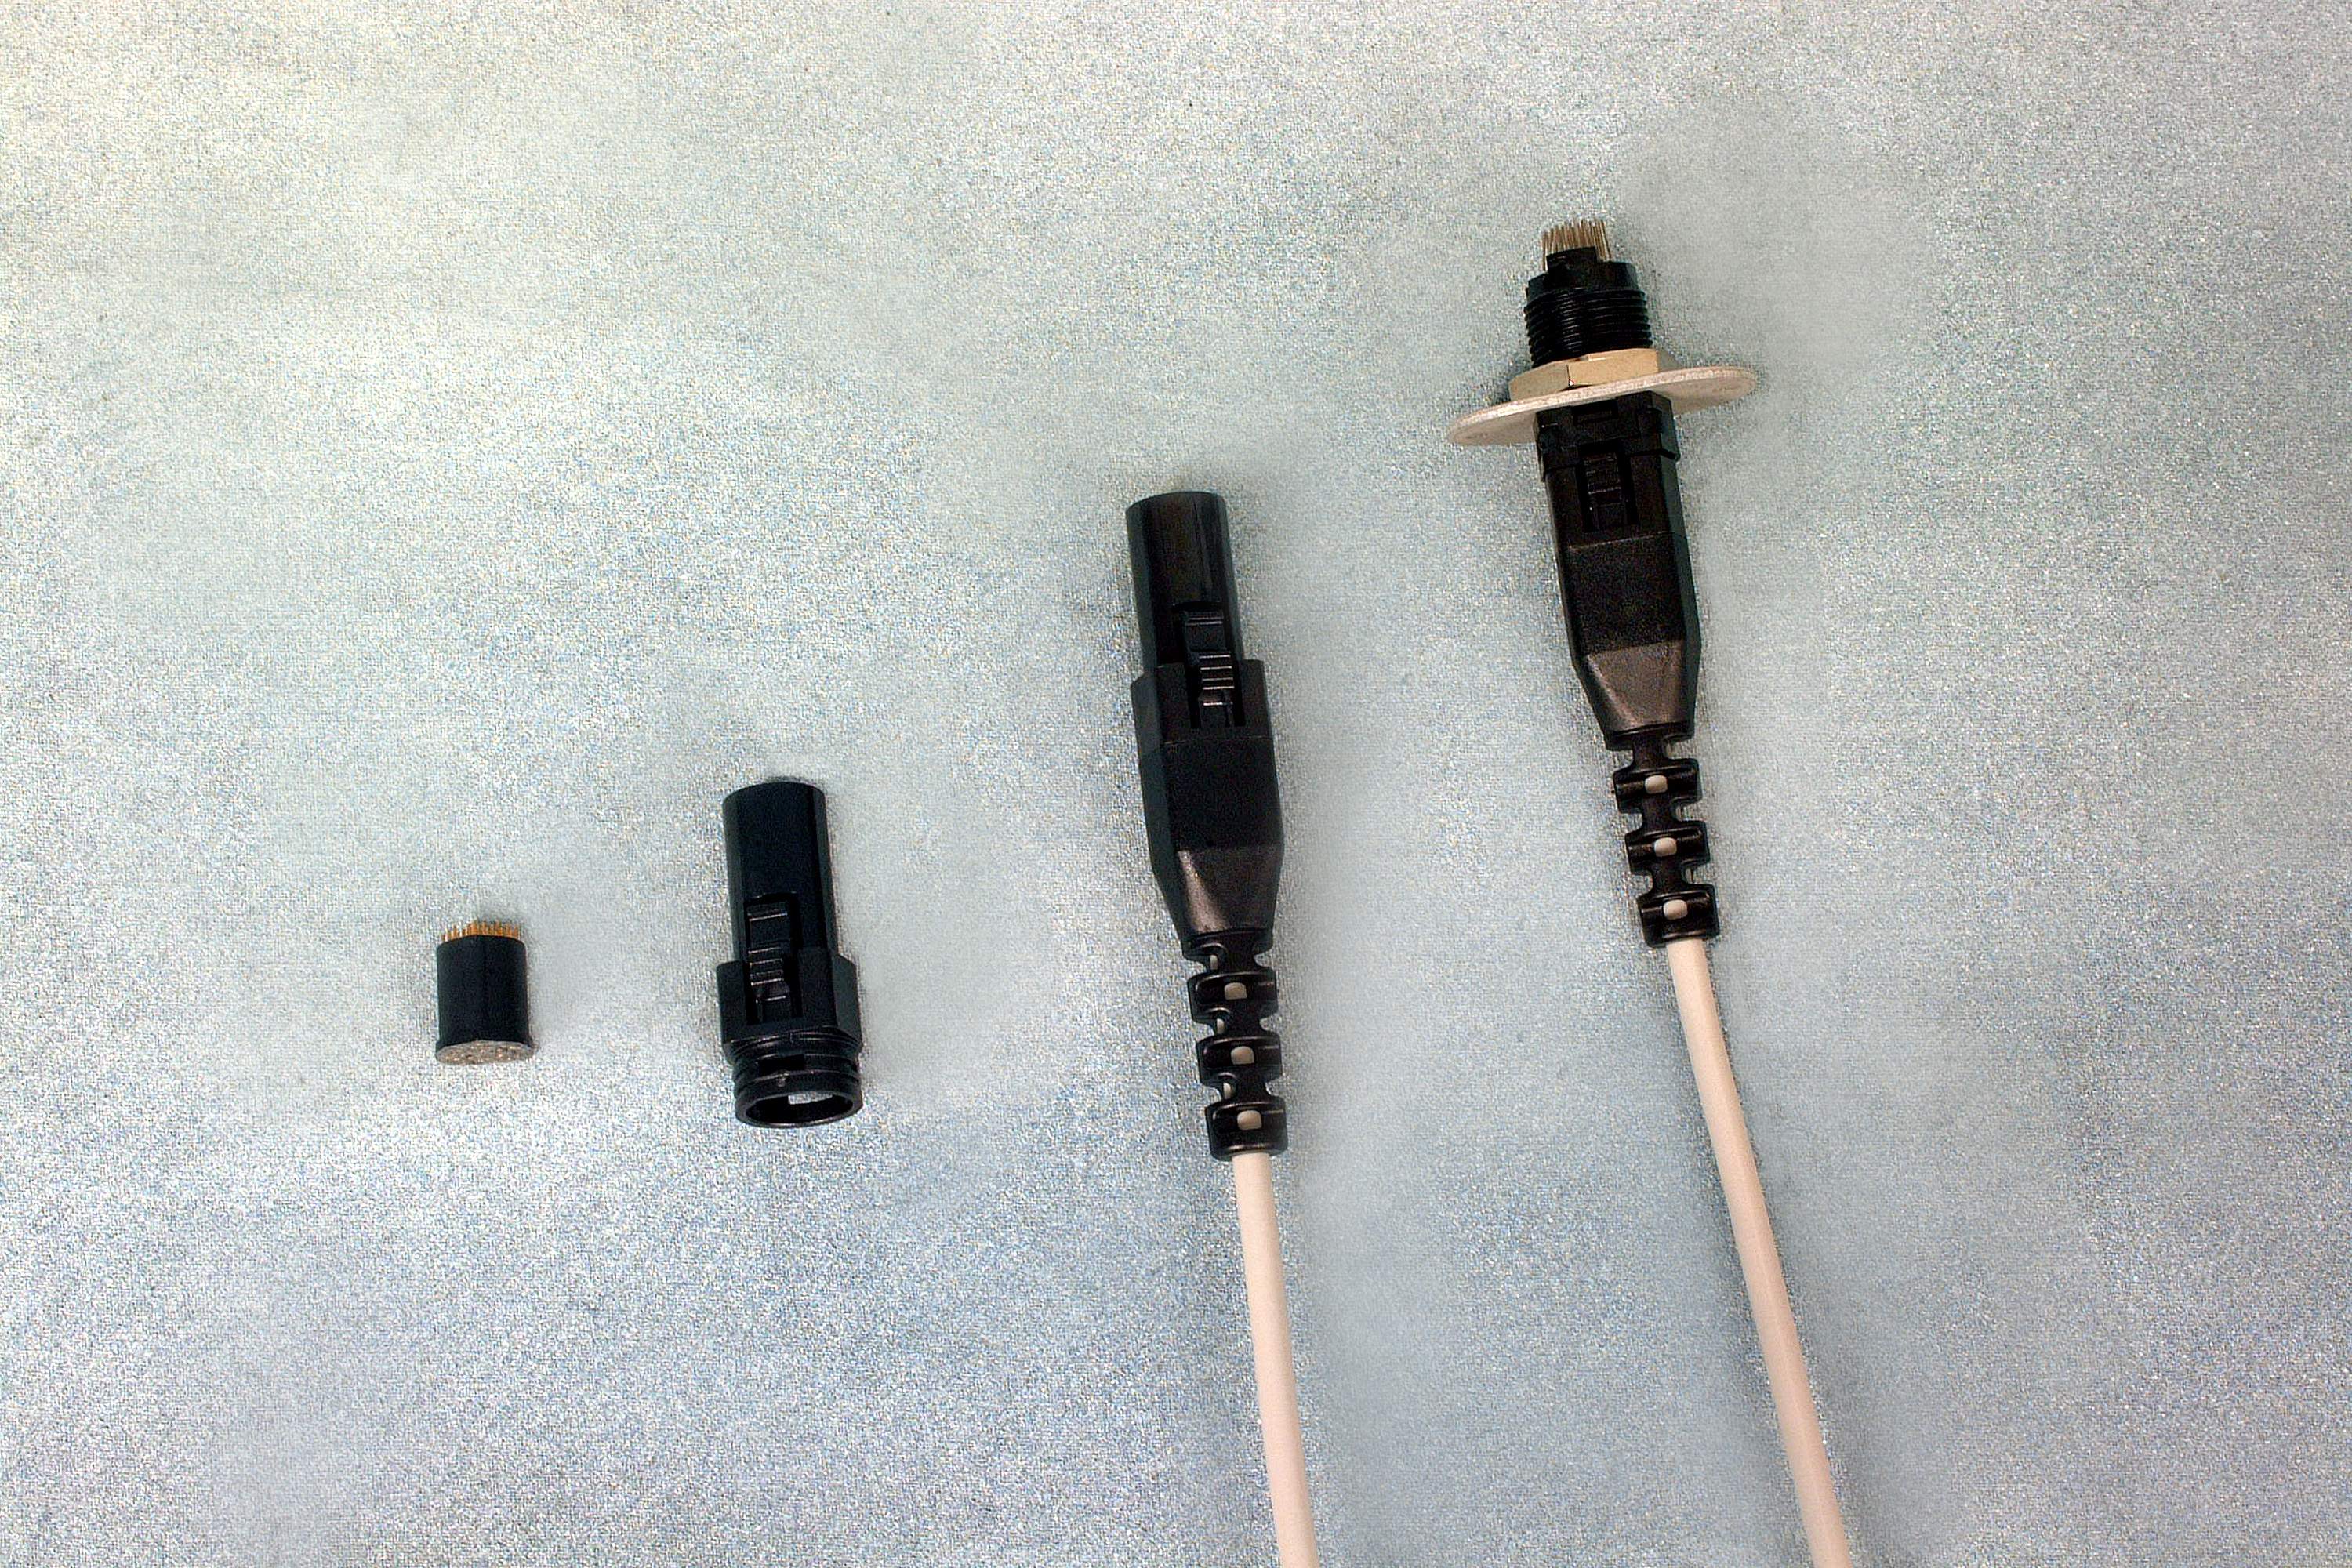 Molded type of AO2 & AO1 connector